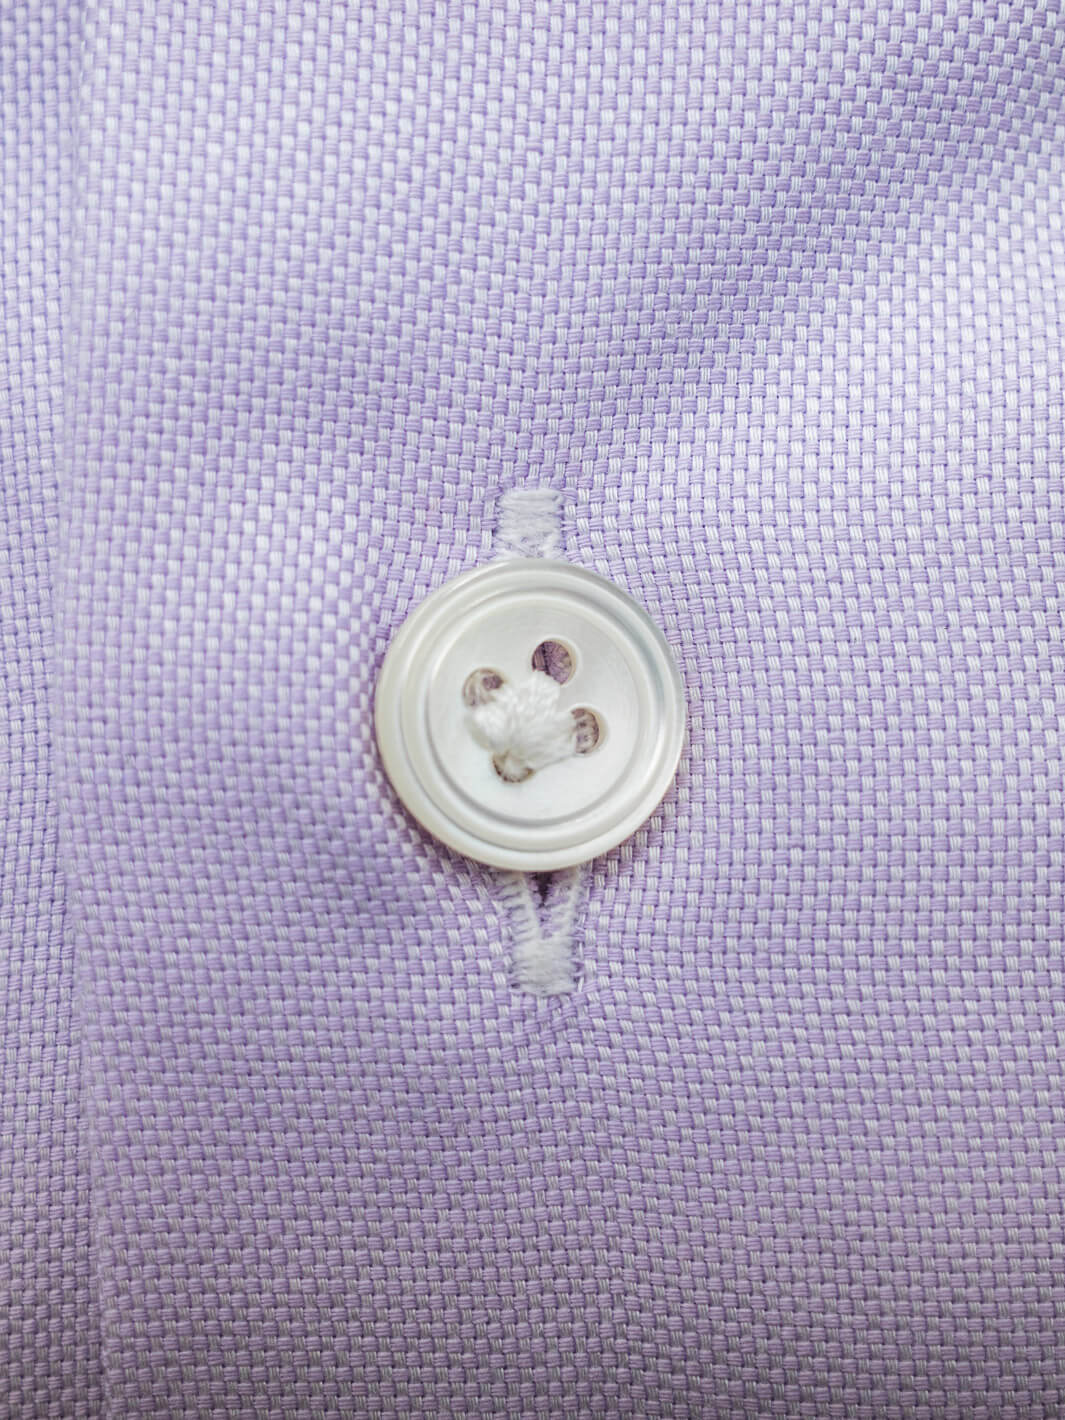 Cotton Oxford Dress Shirt - Purple